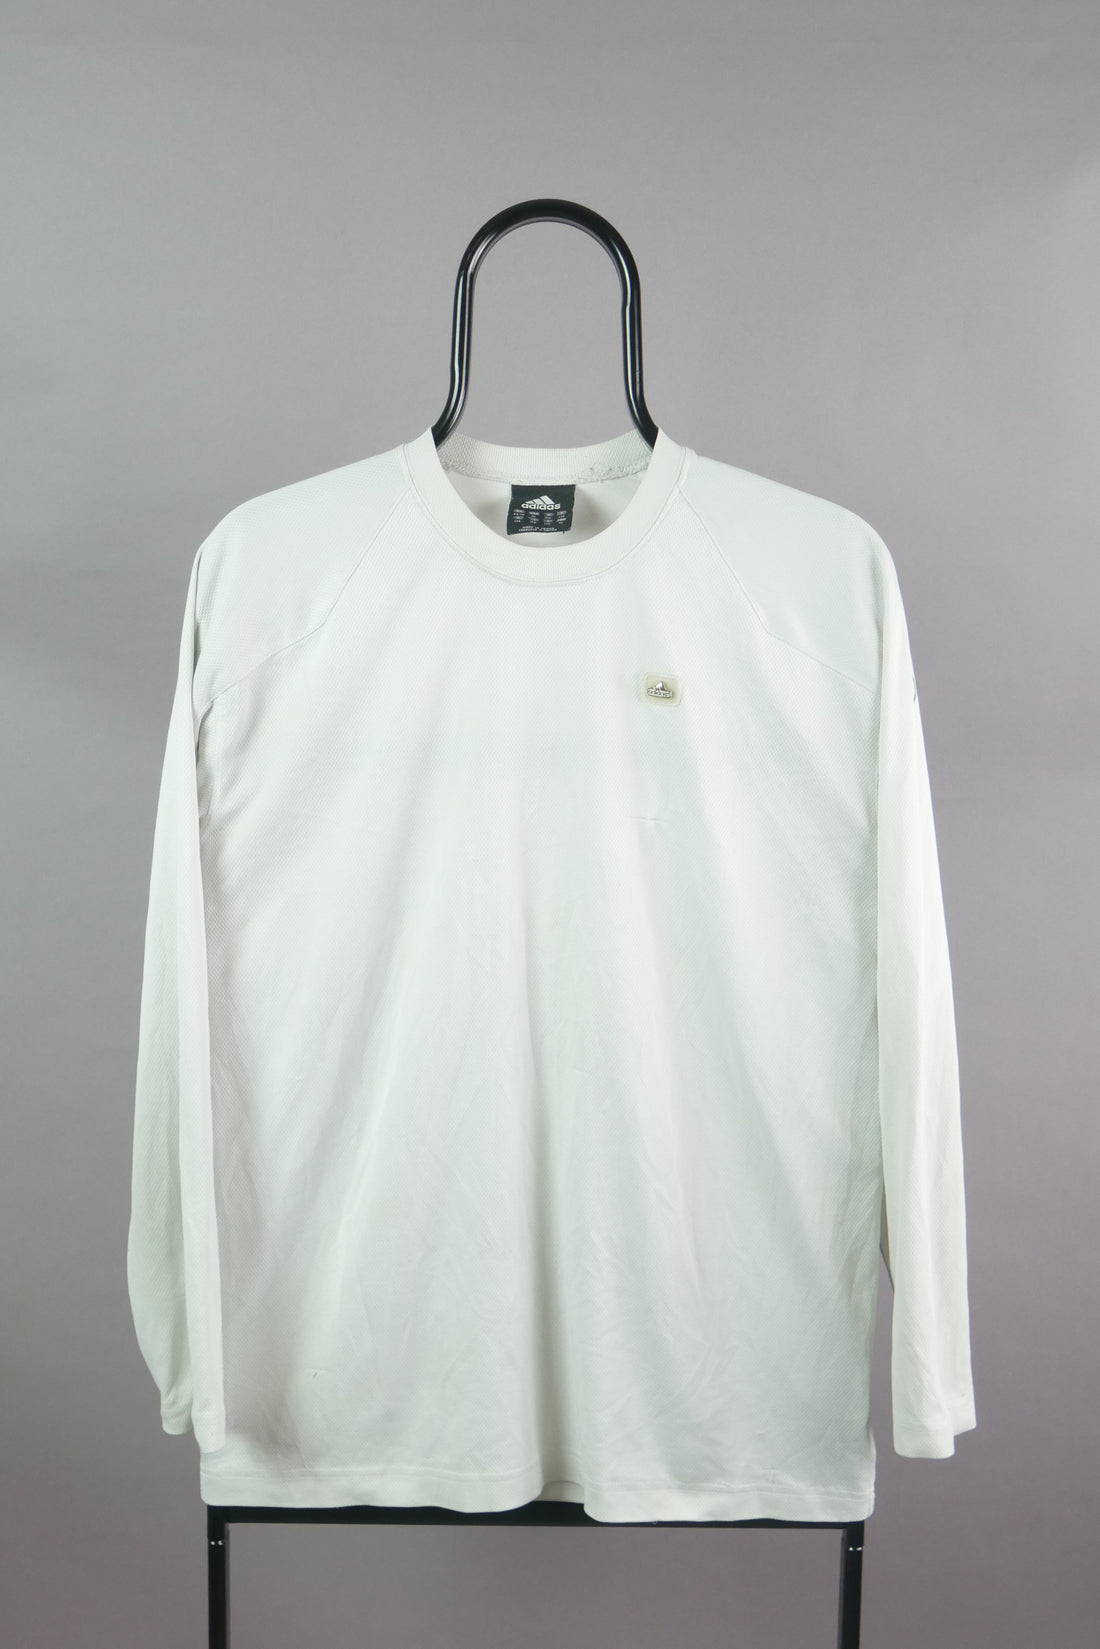 The Adidas 2002 Long Sleeve T-Shirt (L)